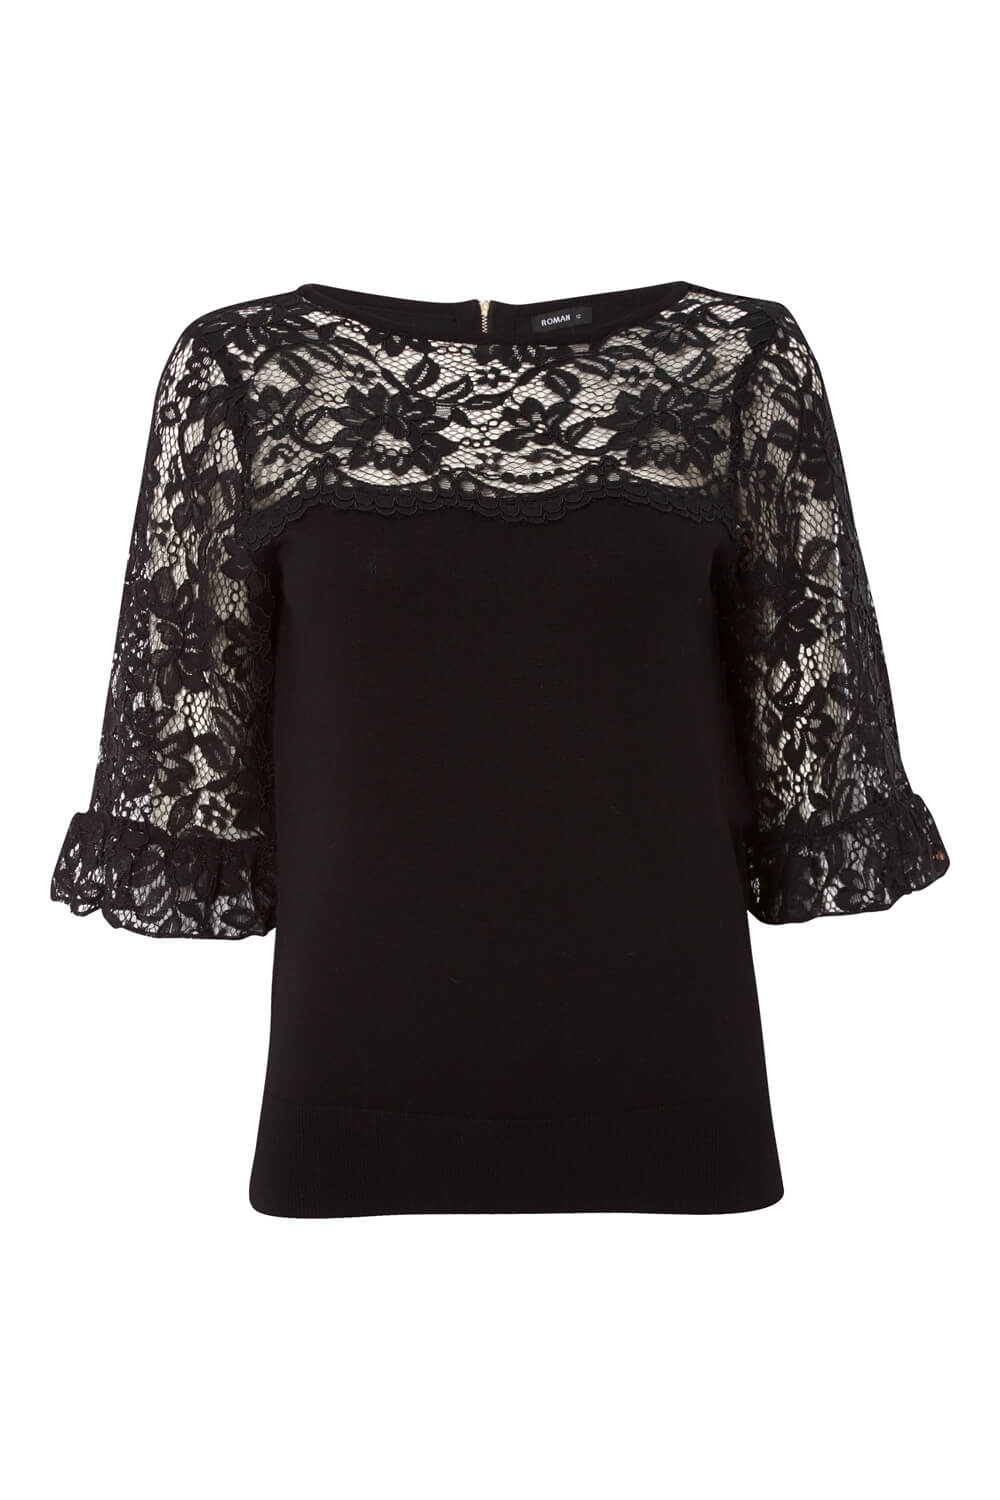 Lace Sleeve Top in Black - Roman Originals UK